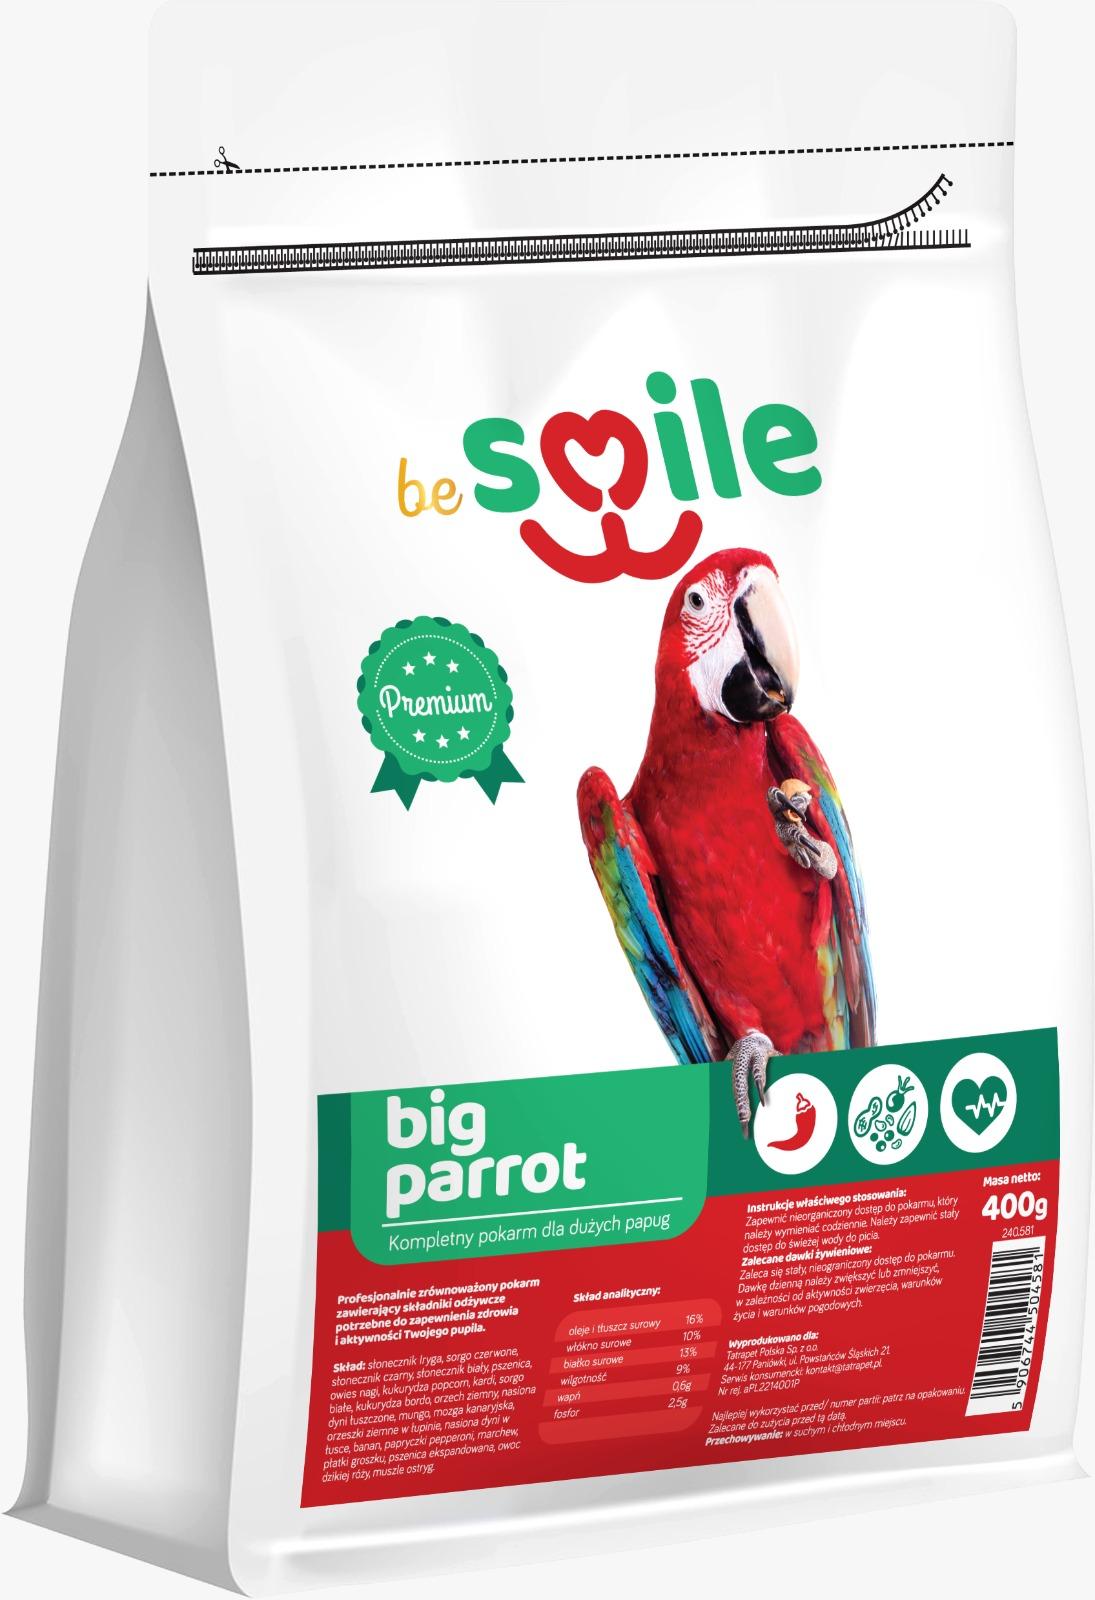 beSMILE PARROT - Big Parrot 800g food for large parrots